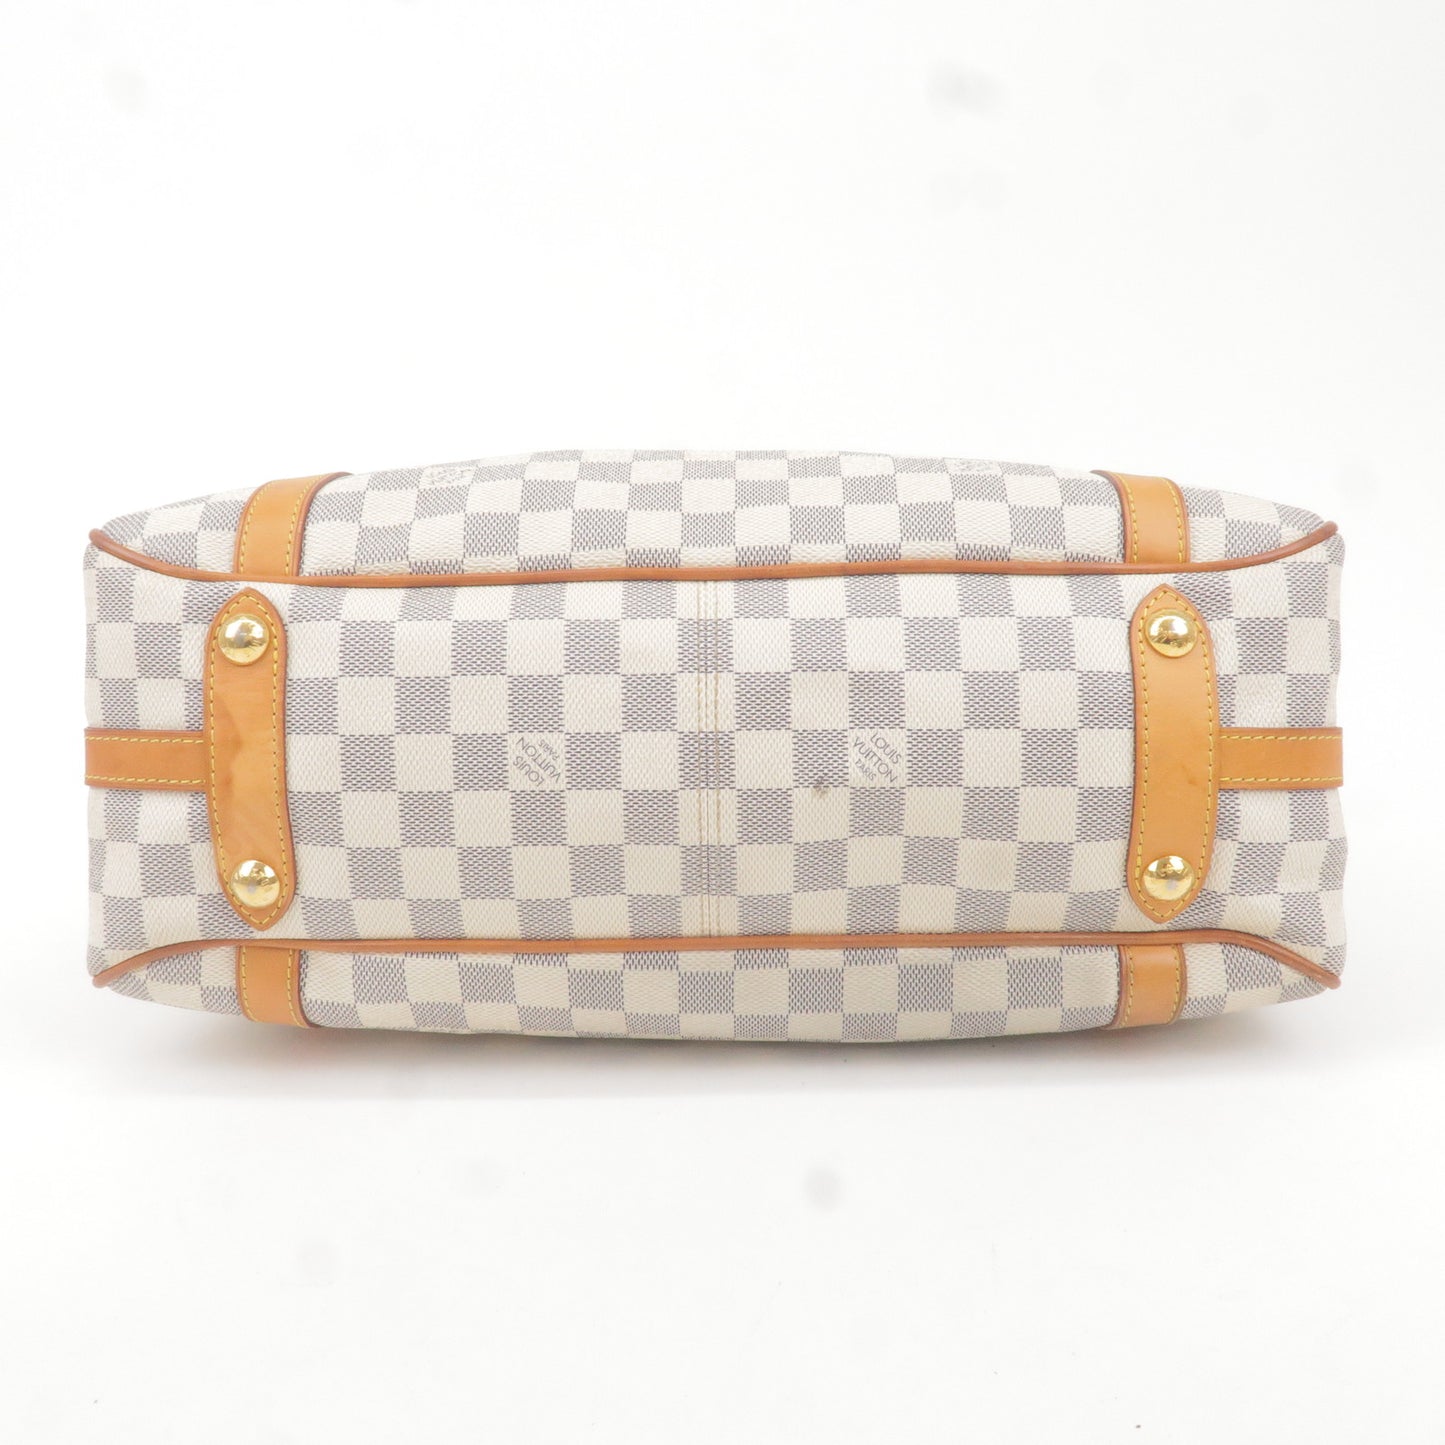 Louis Vuitton Damier Azur Stresa PM Shoulder Bag N42220